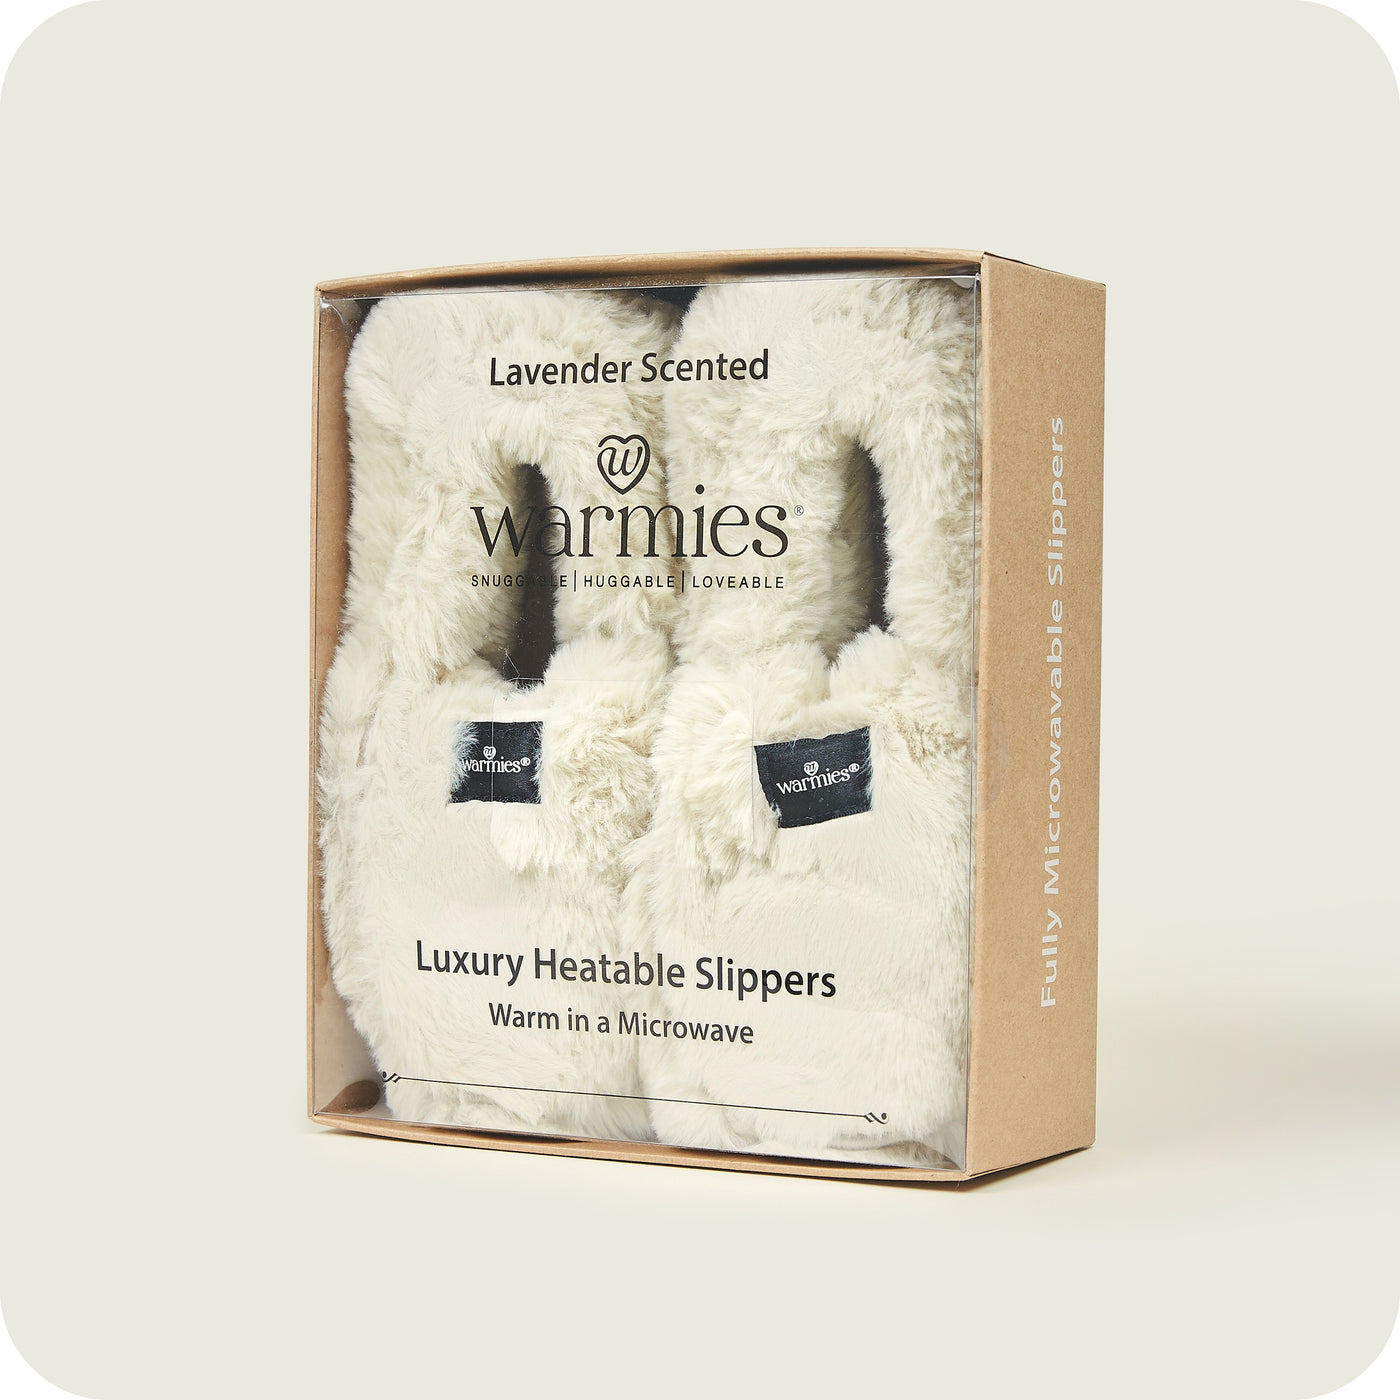 Warmies Luxury Almond Slippers